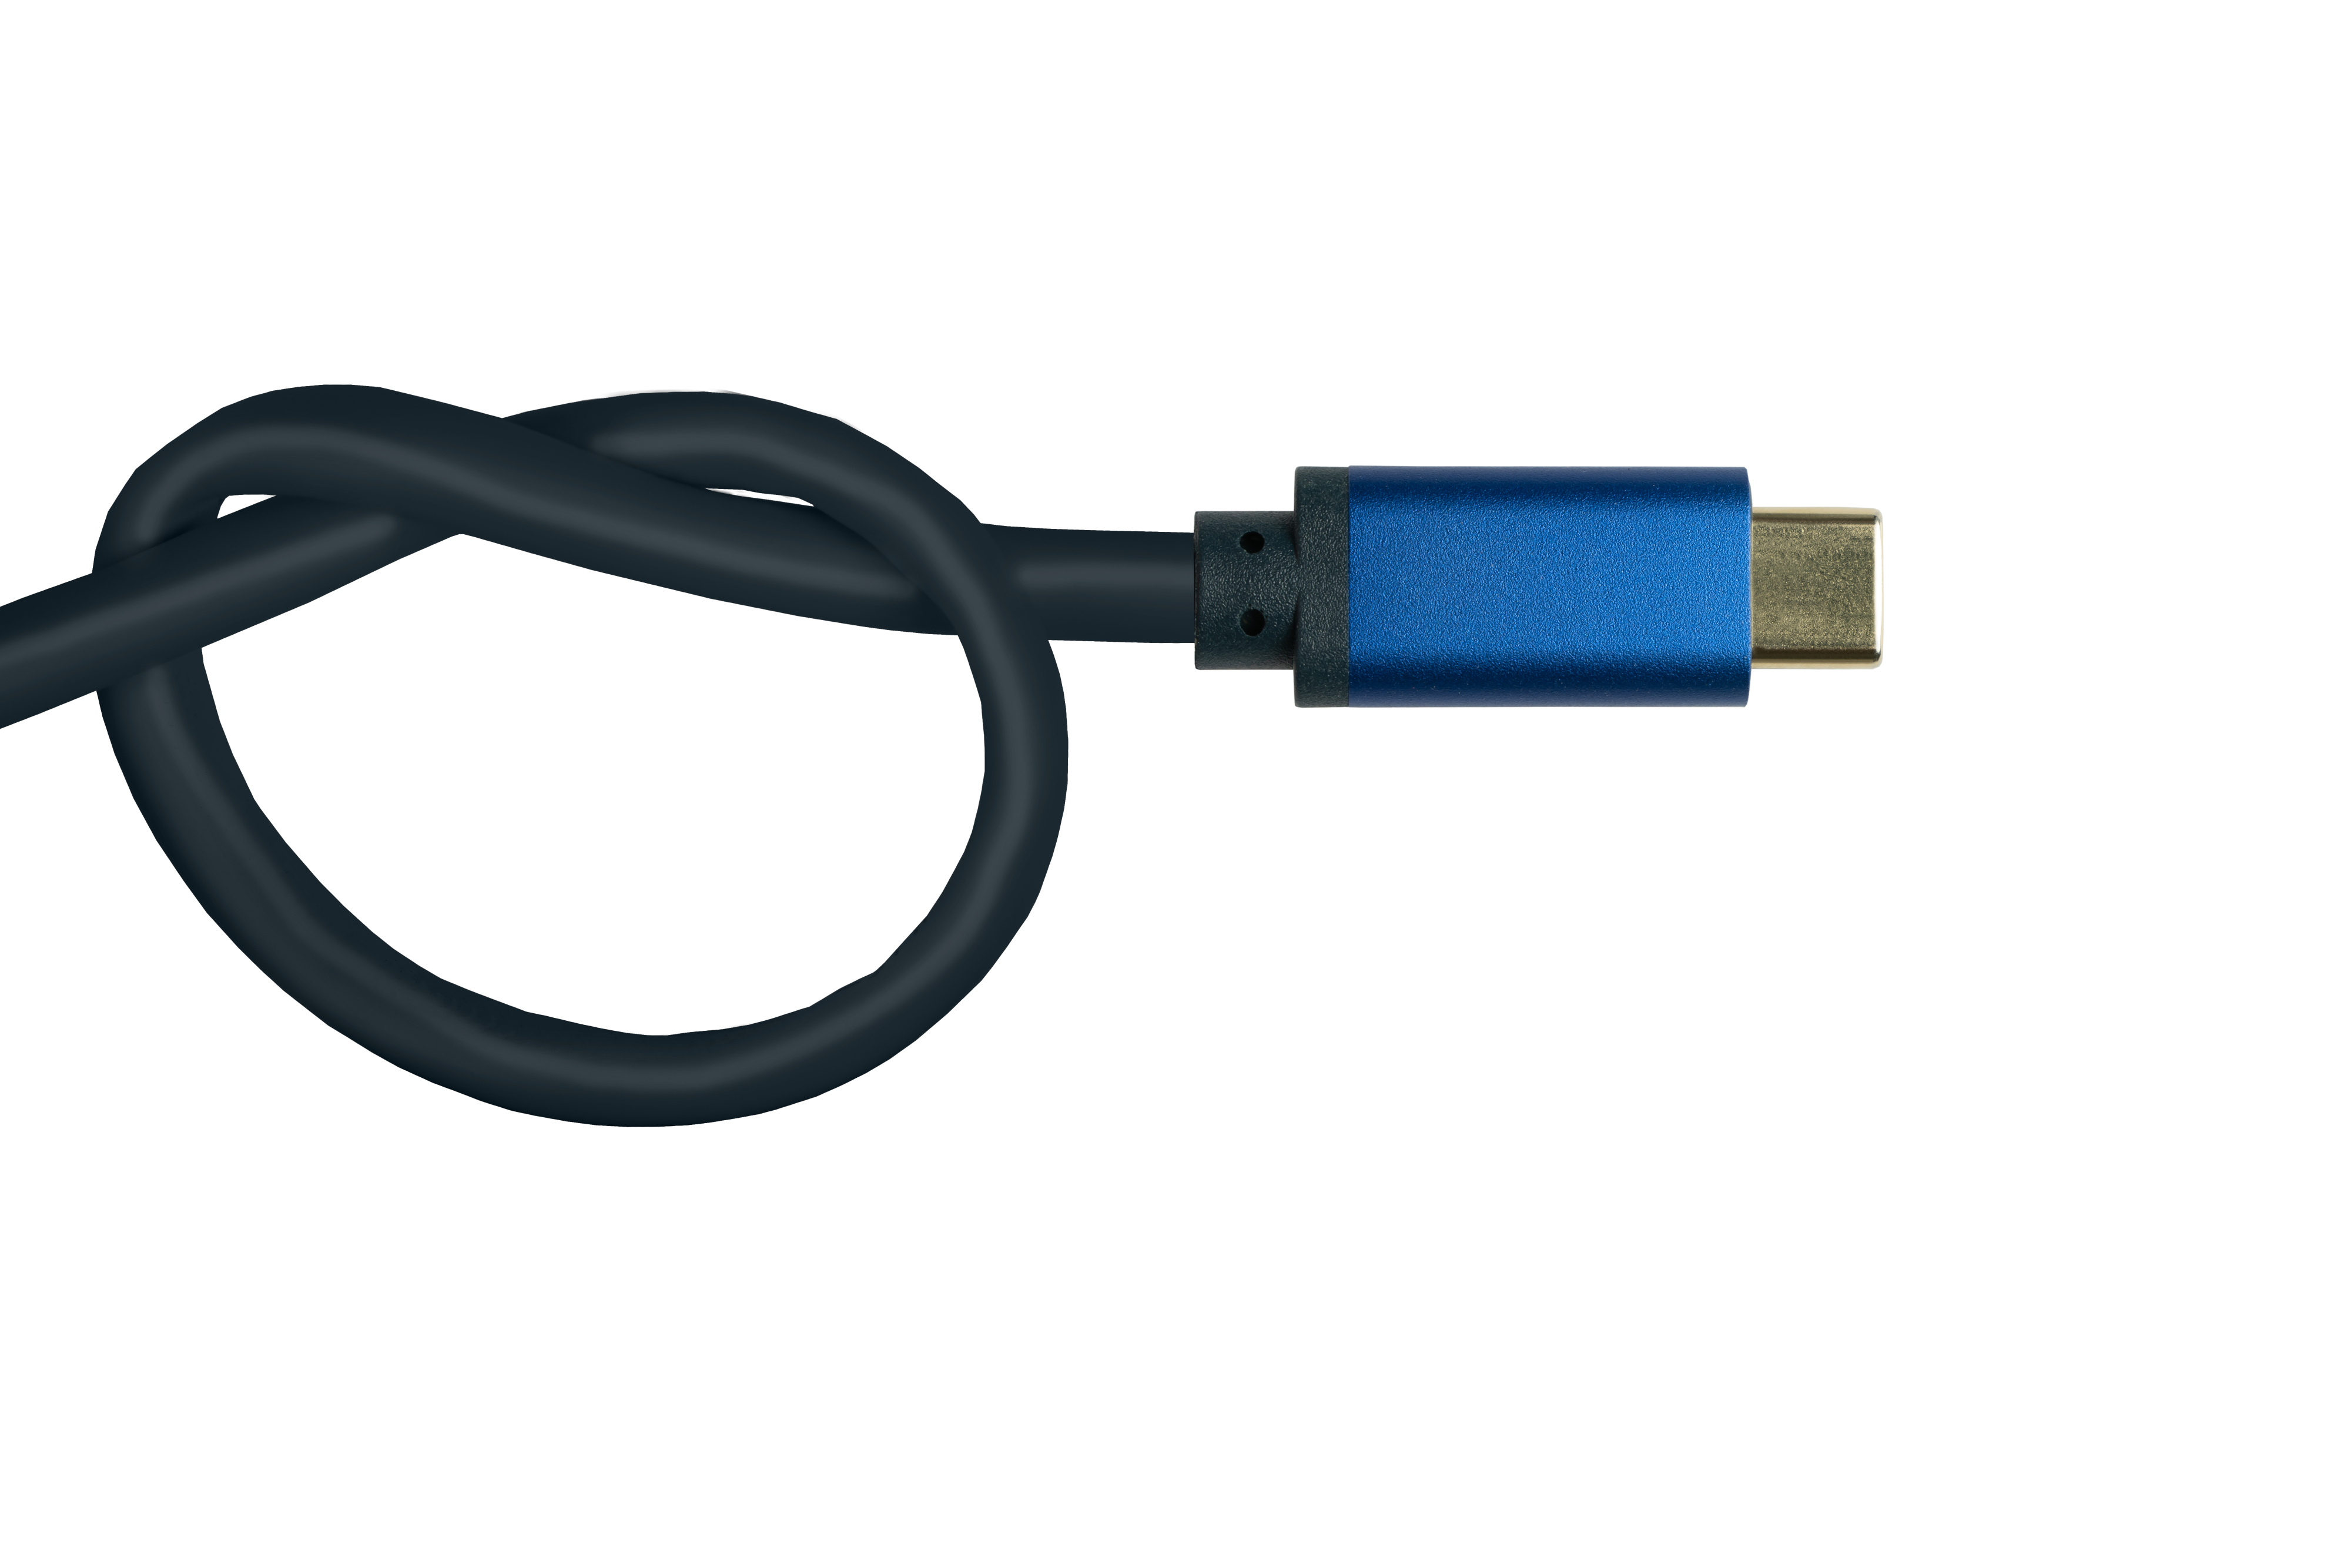 GOOD CONNECTIONS USB-C™ 4K HDMI dunkelblau Kabel, CU, UHD @60Hz, SmartFLEX Adapterkabel Aluminiumgehäuse, an 2.0b